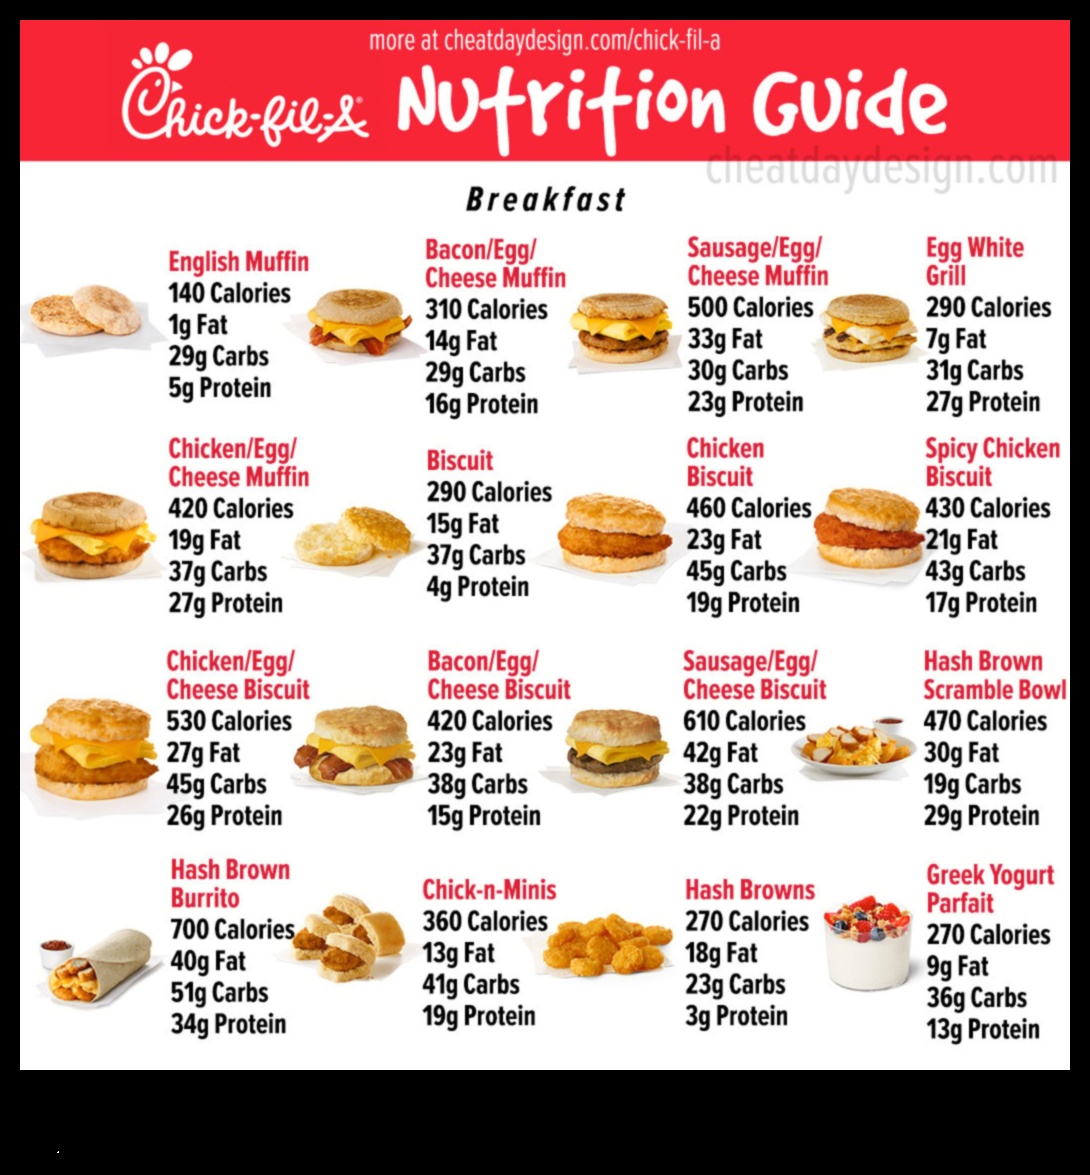 ChickfilA's Breakfast Menu A Comprehensive Guide World of